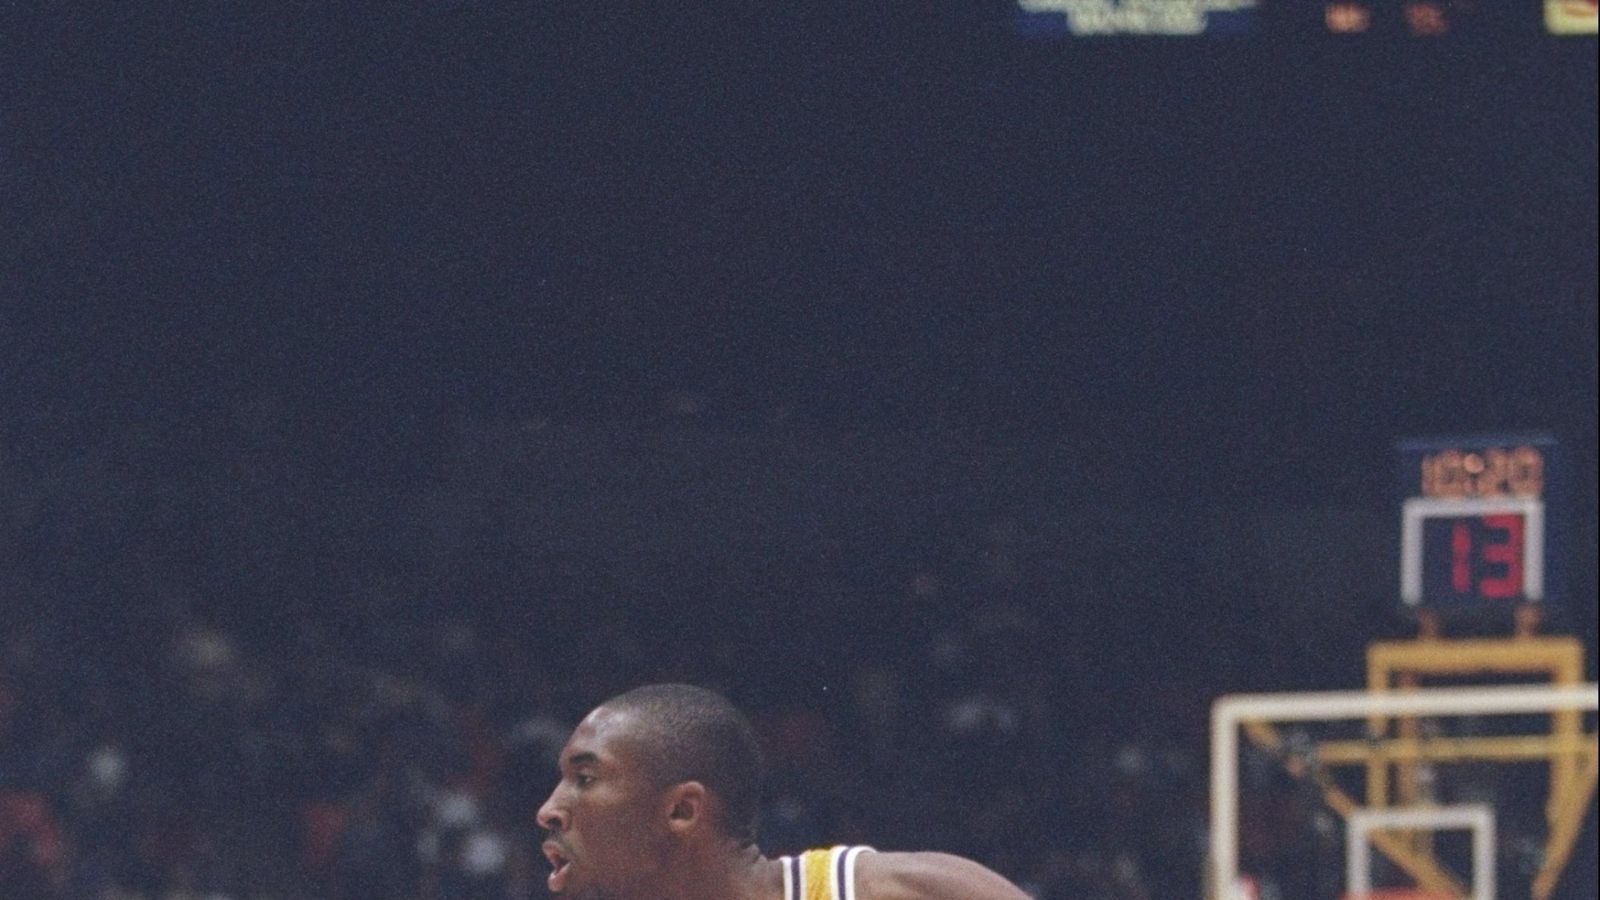 Download Kobe Bryant Cool Sparks Wallpaper